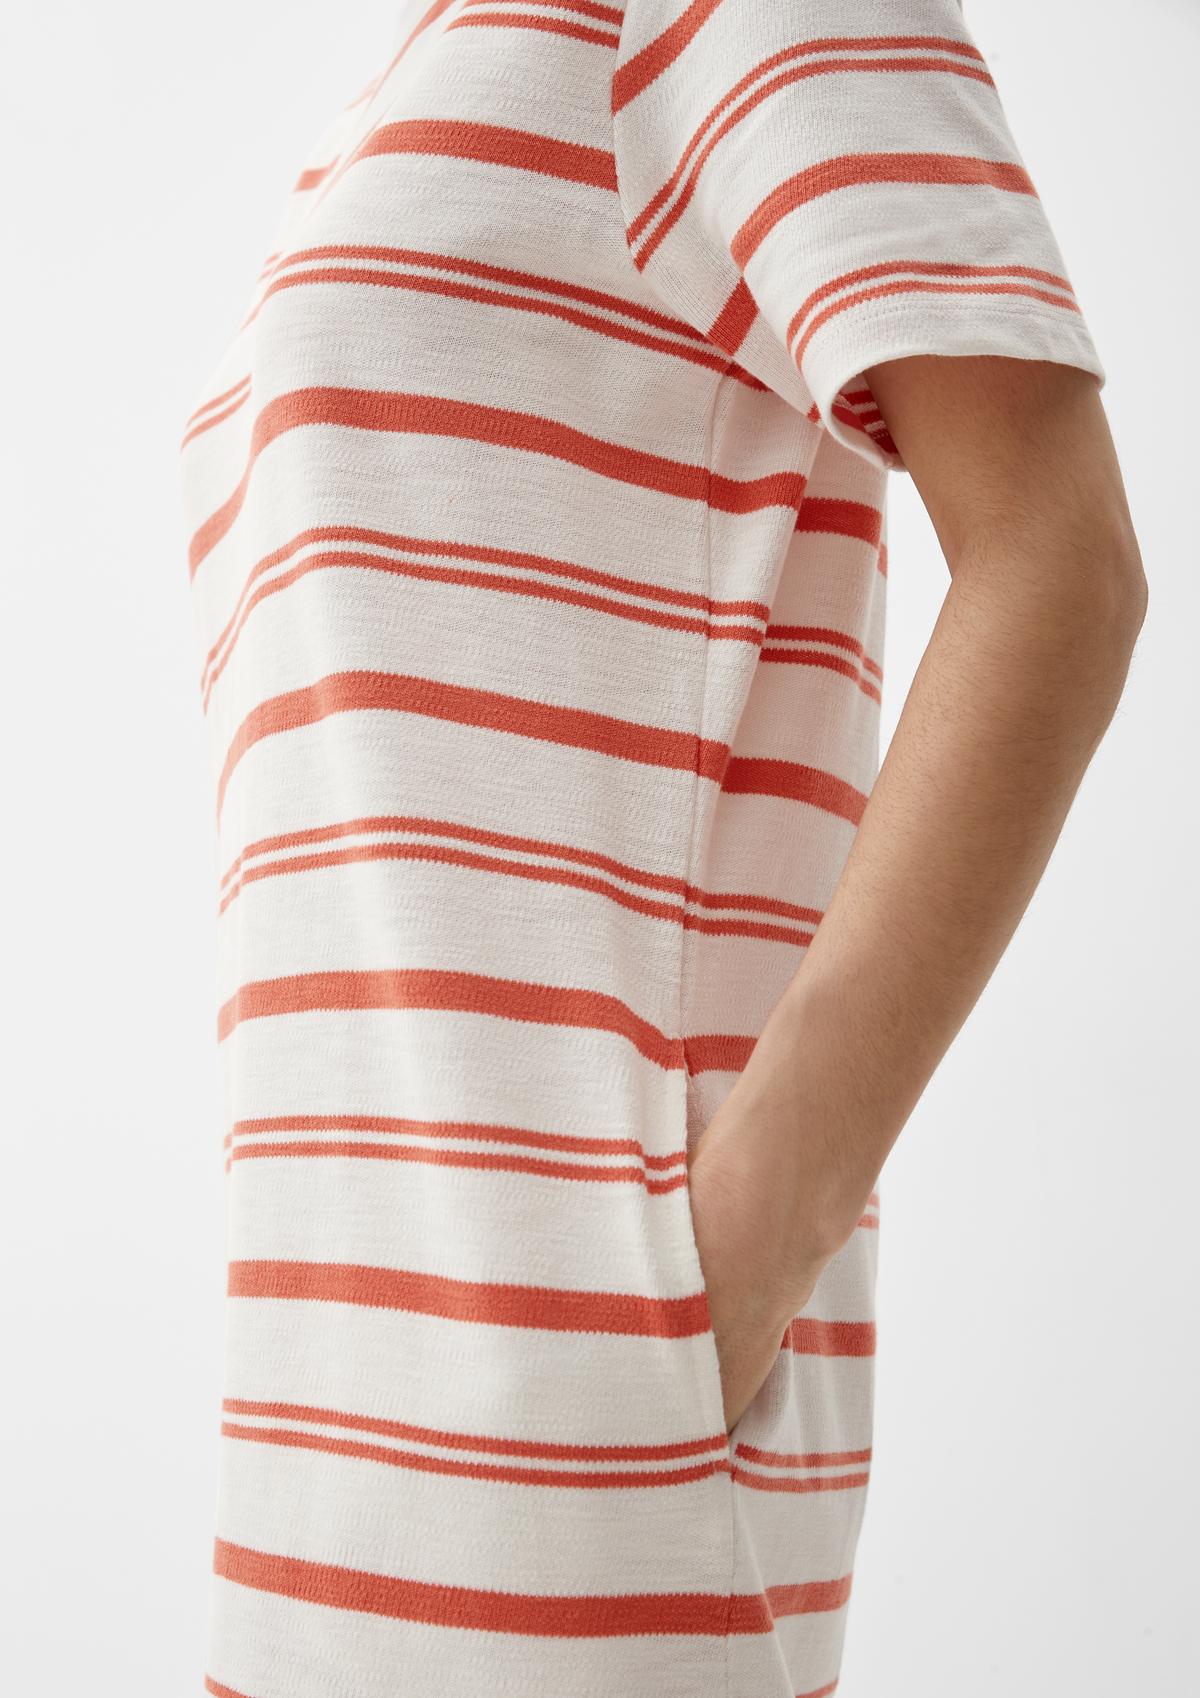 s.Oliver Midi dress with a stripe pattern